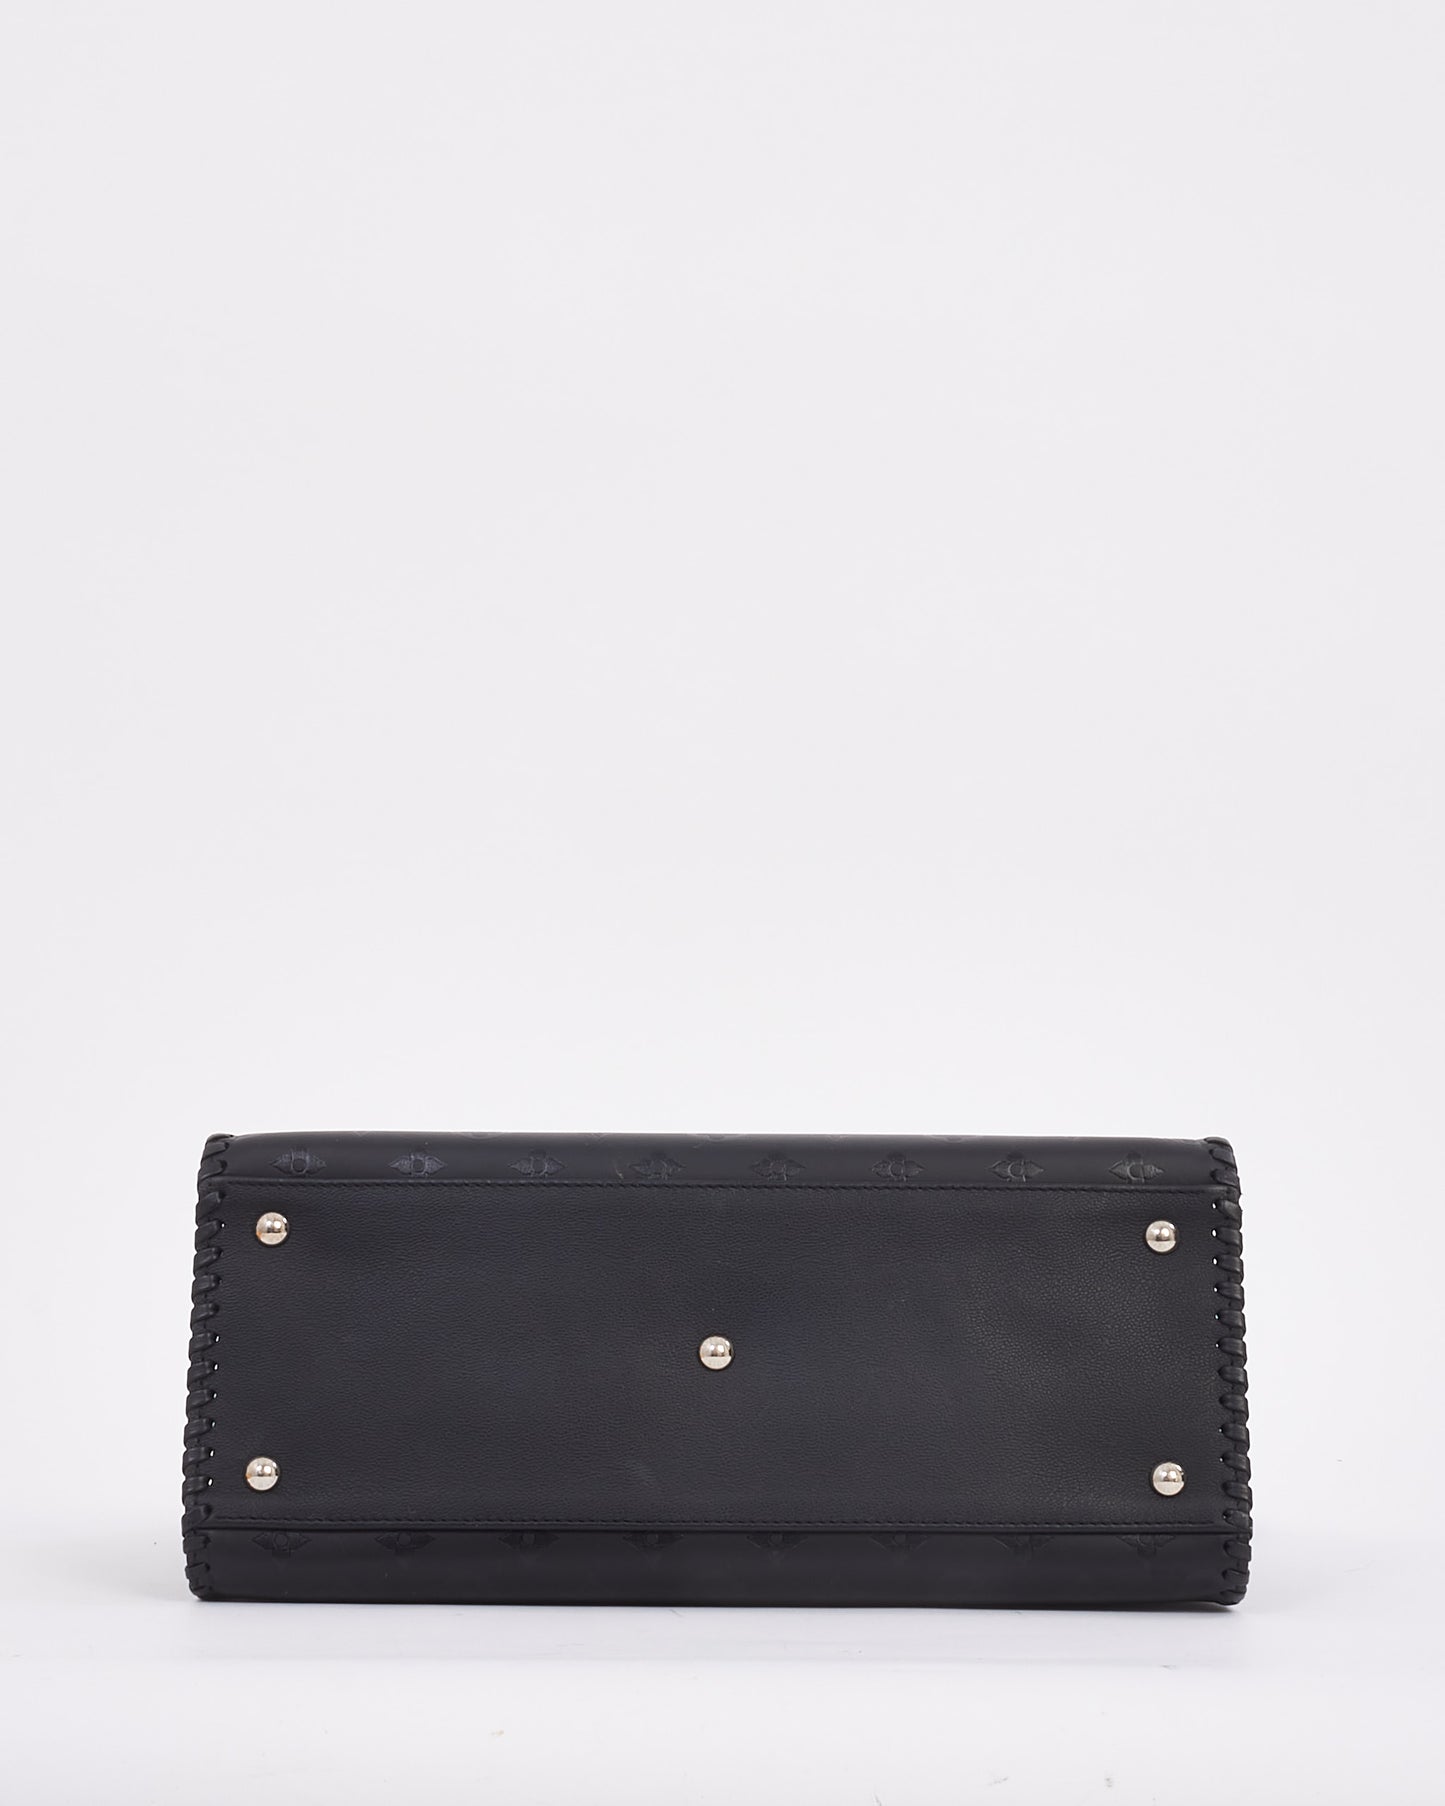 Louis Vuitton Black Leather Monogram Plume Very Tote MM Bag